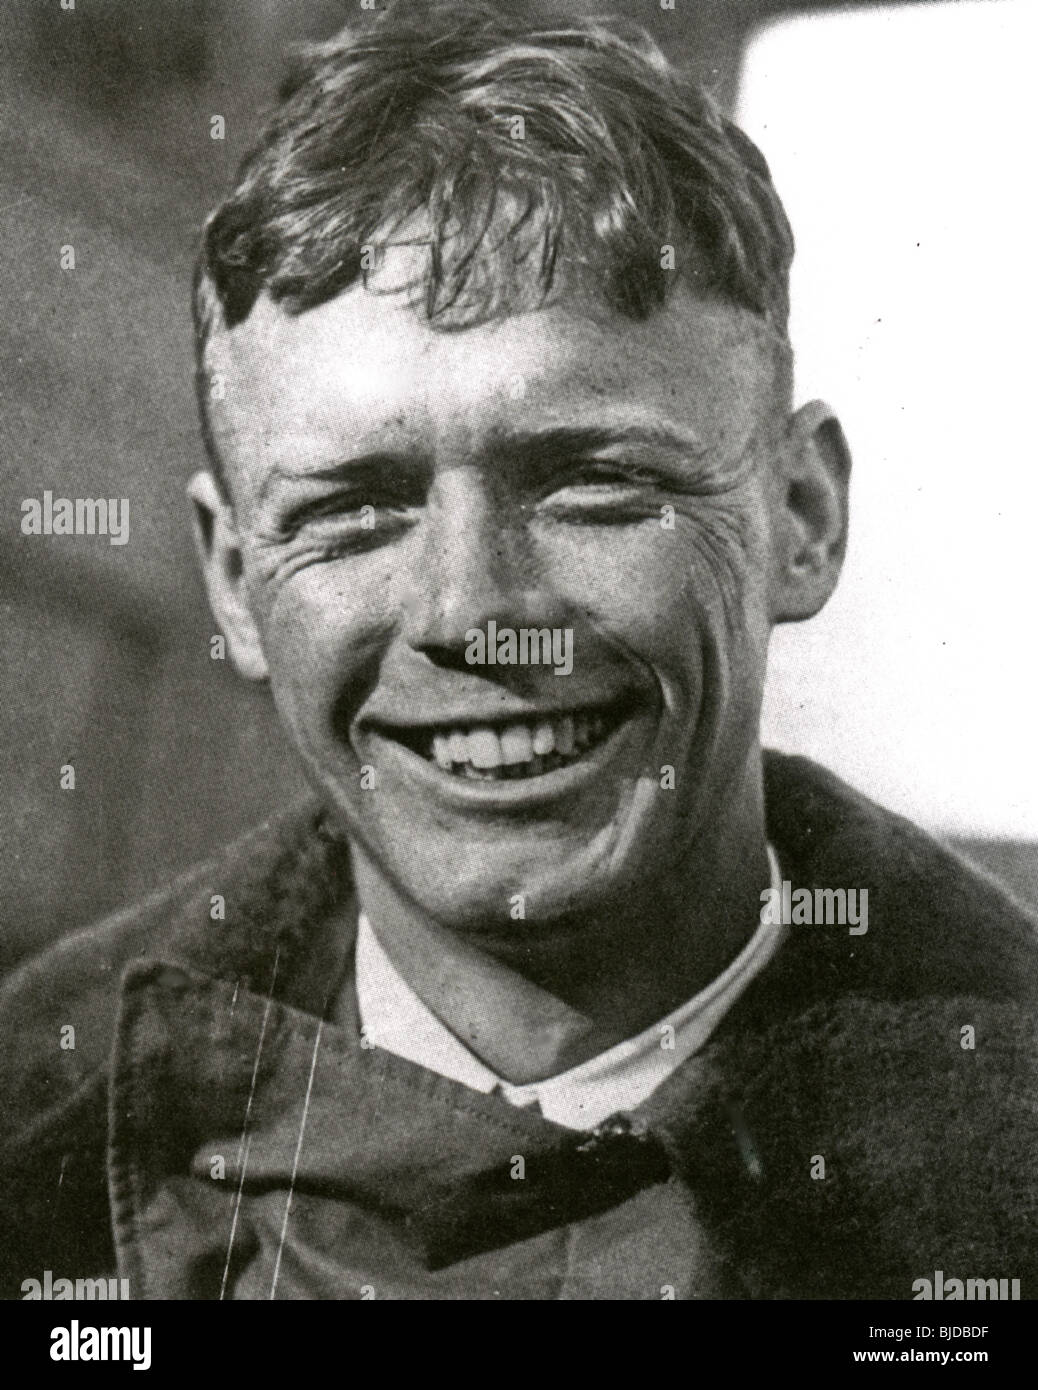 CHARLES LINDBERGH - US aviator (1902-74) Stock Photo